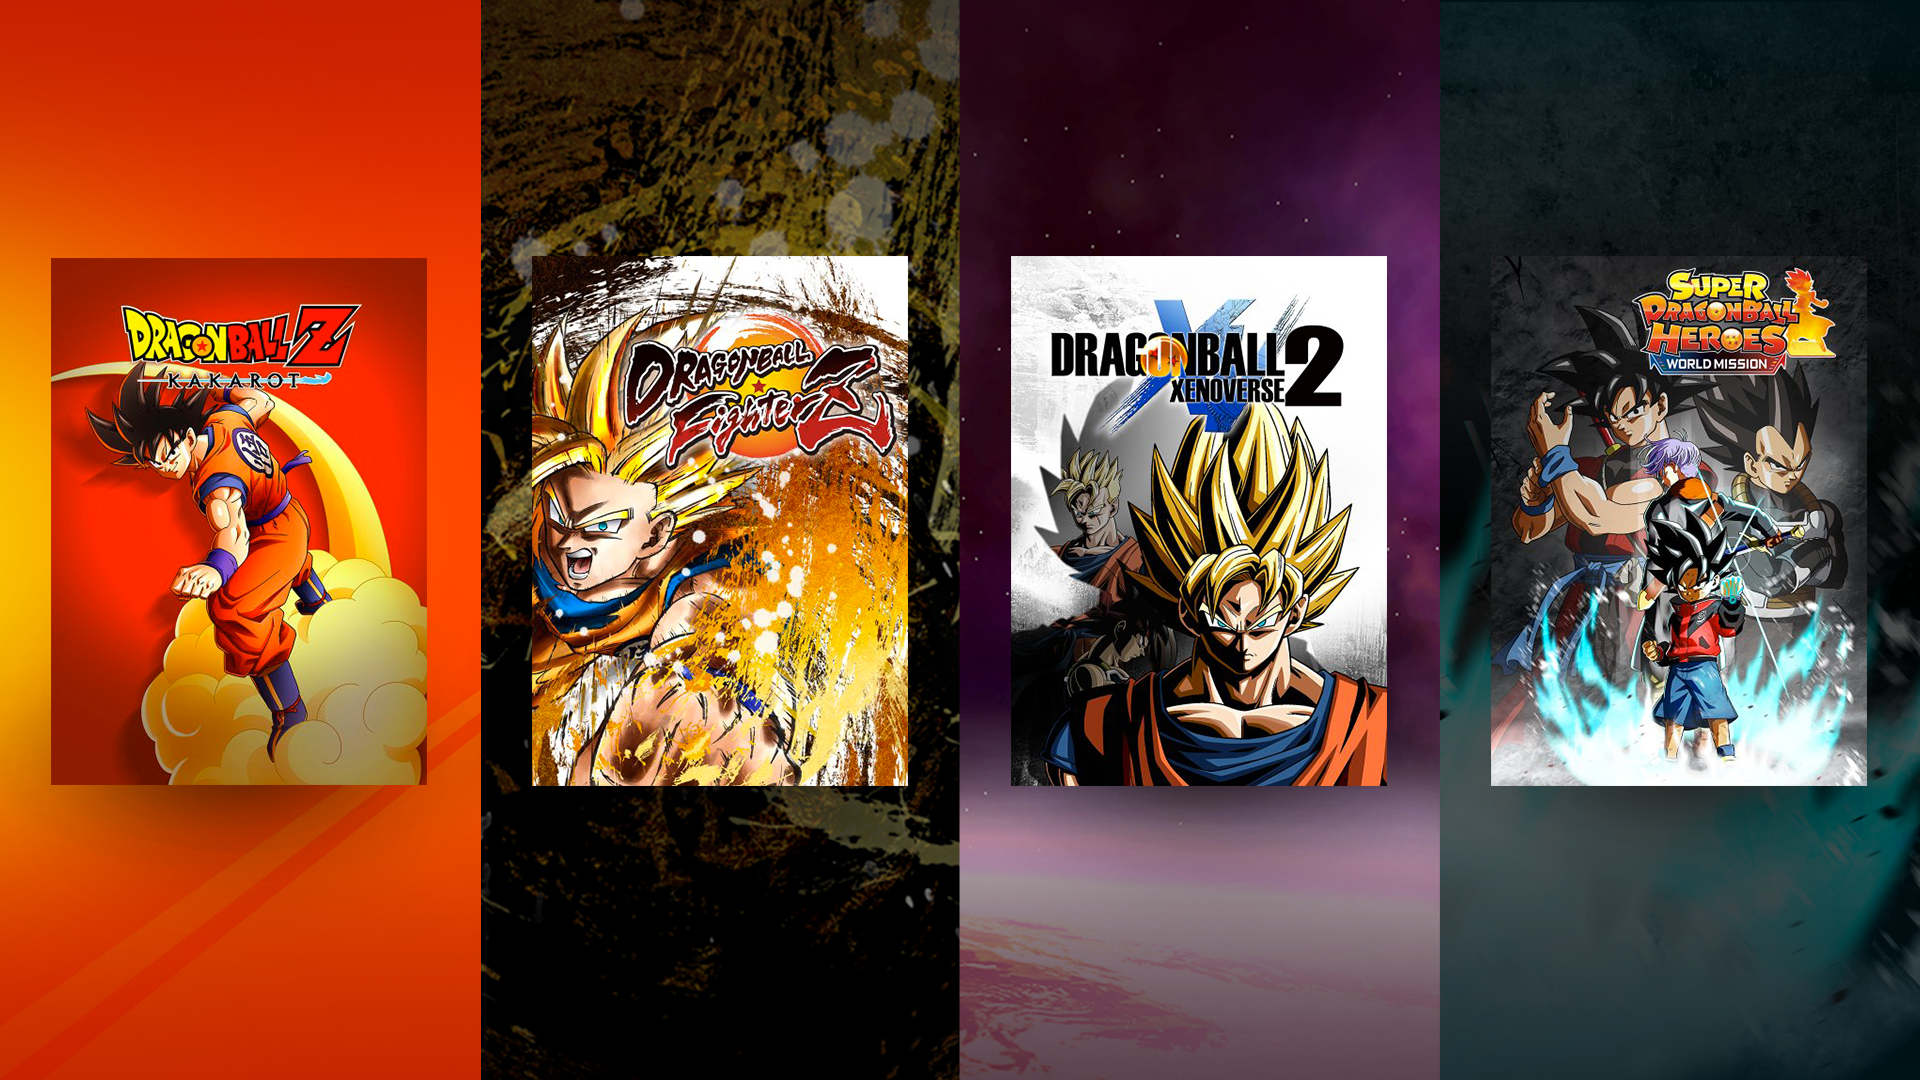 Dbz Goku 2020 Art Wallpapers